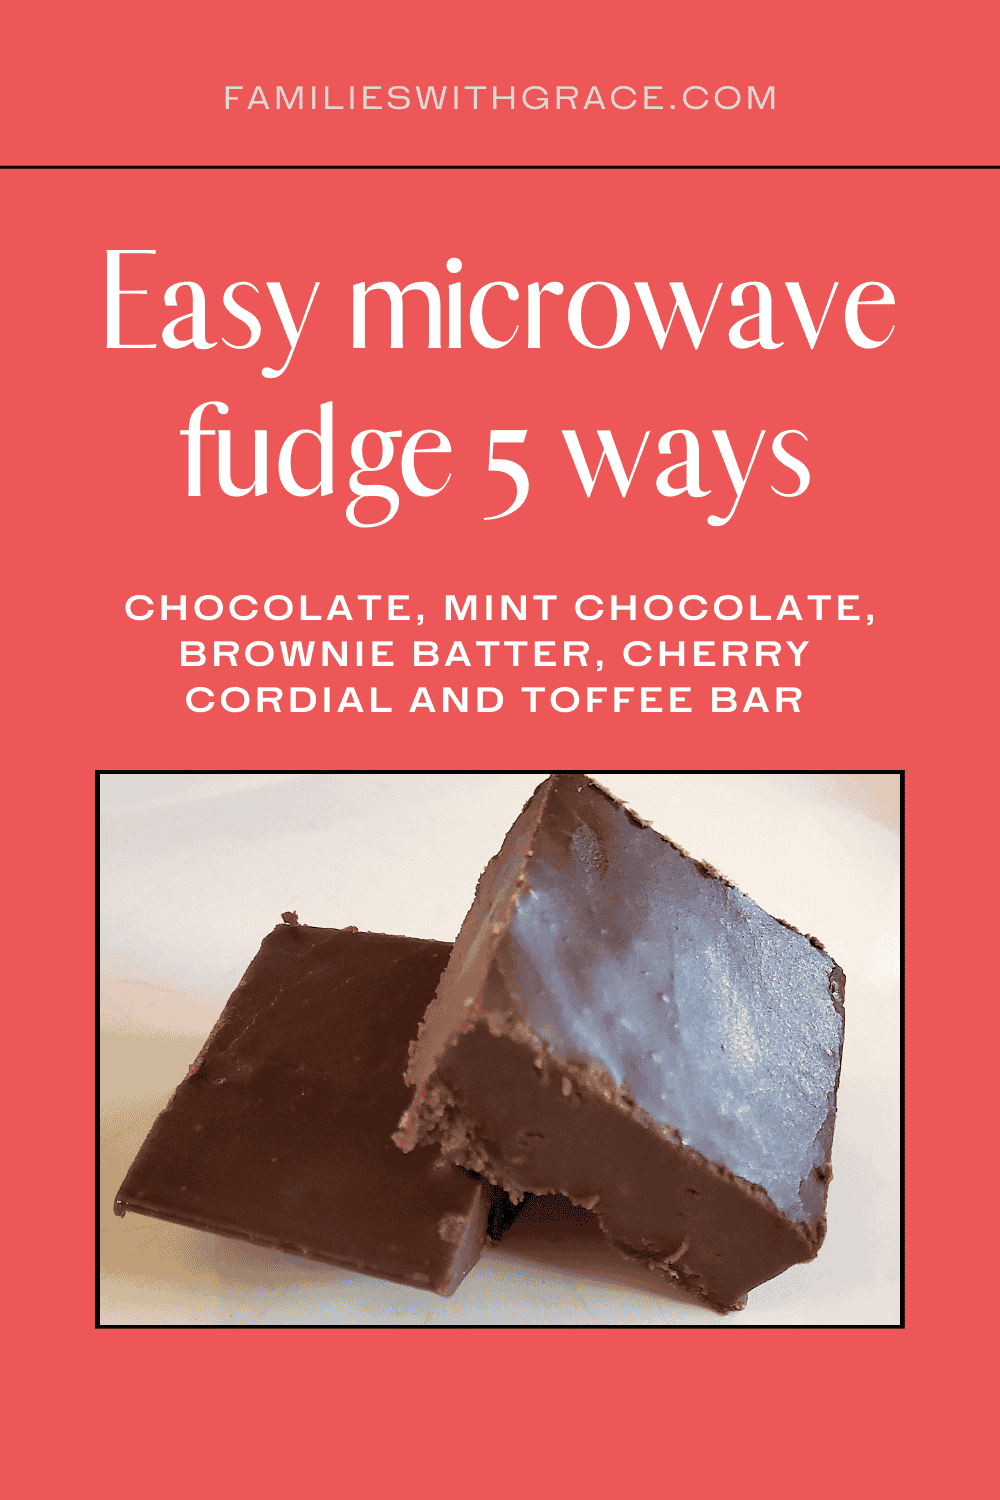 Easy microwave fudge recipe made five ways